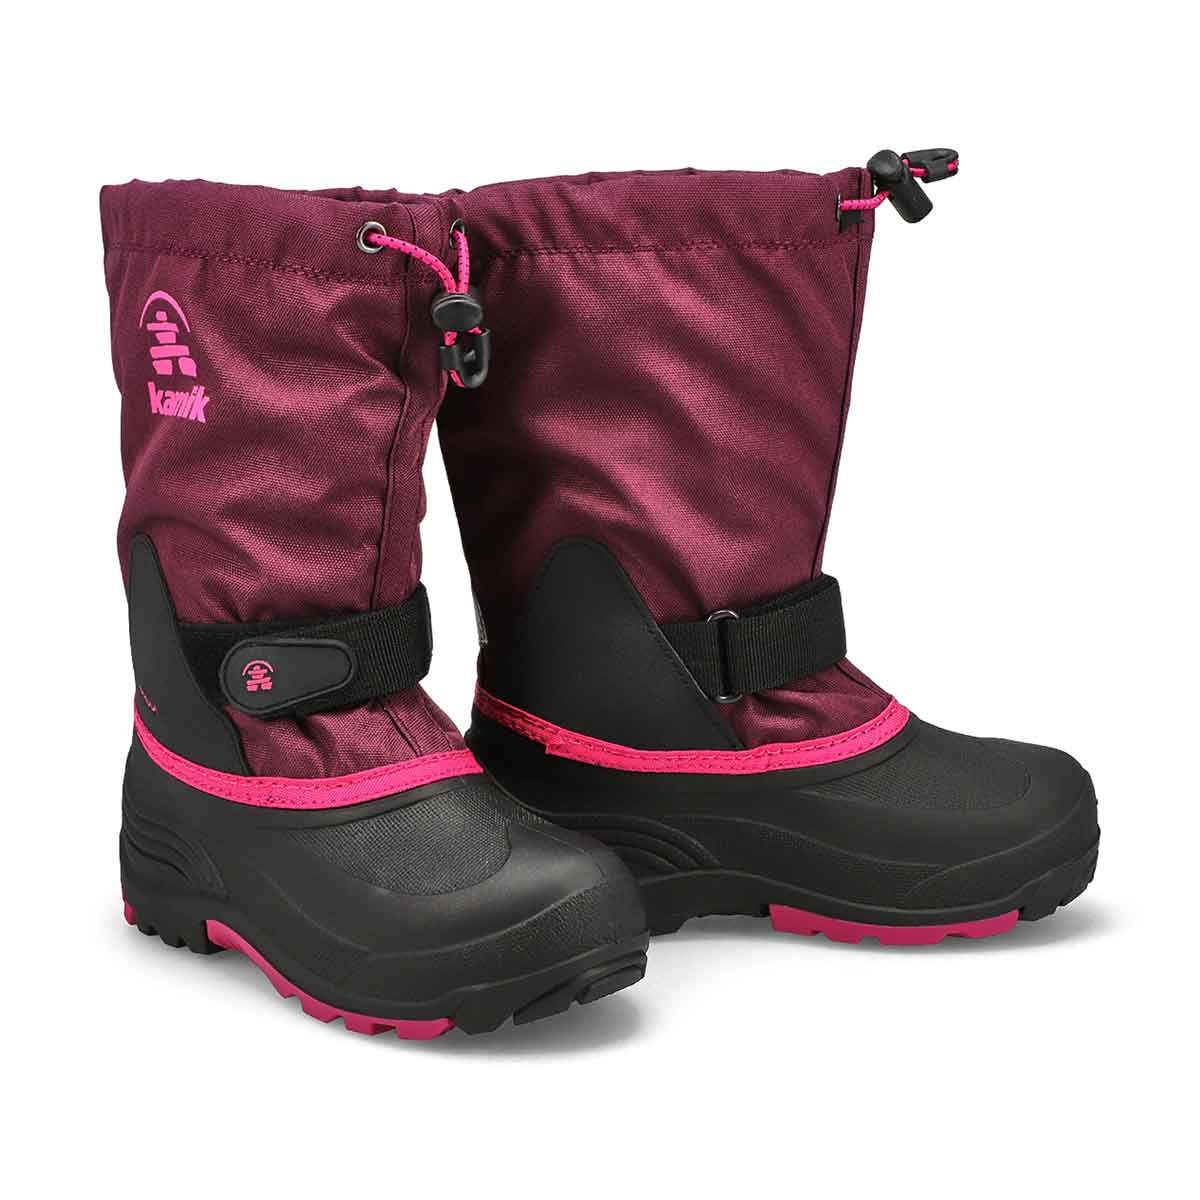 Girls' Waterbug 5 Waterproof Winter Boot - Grape